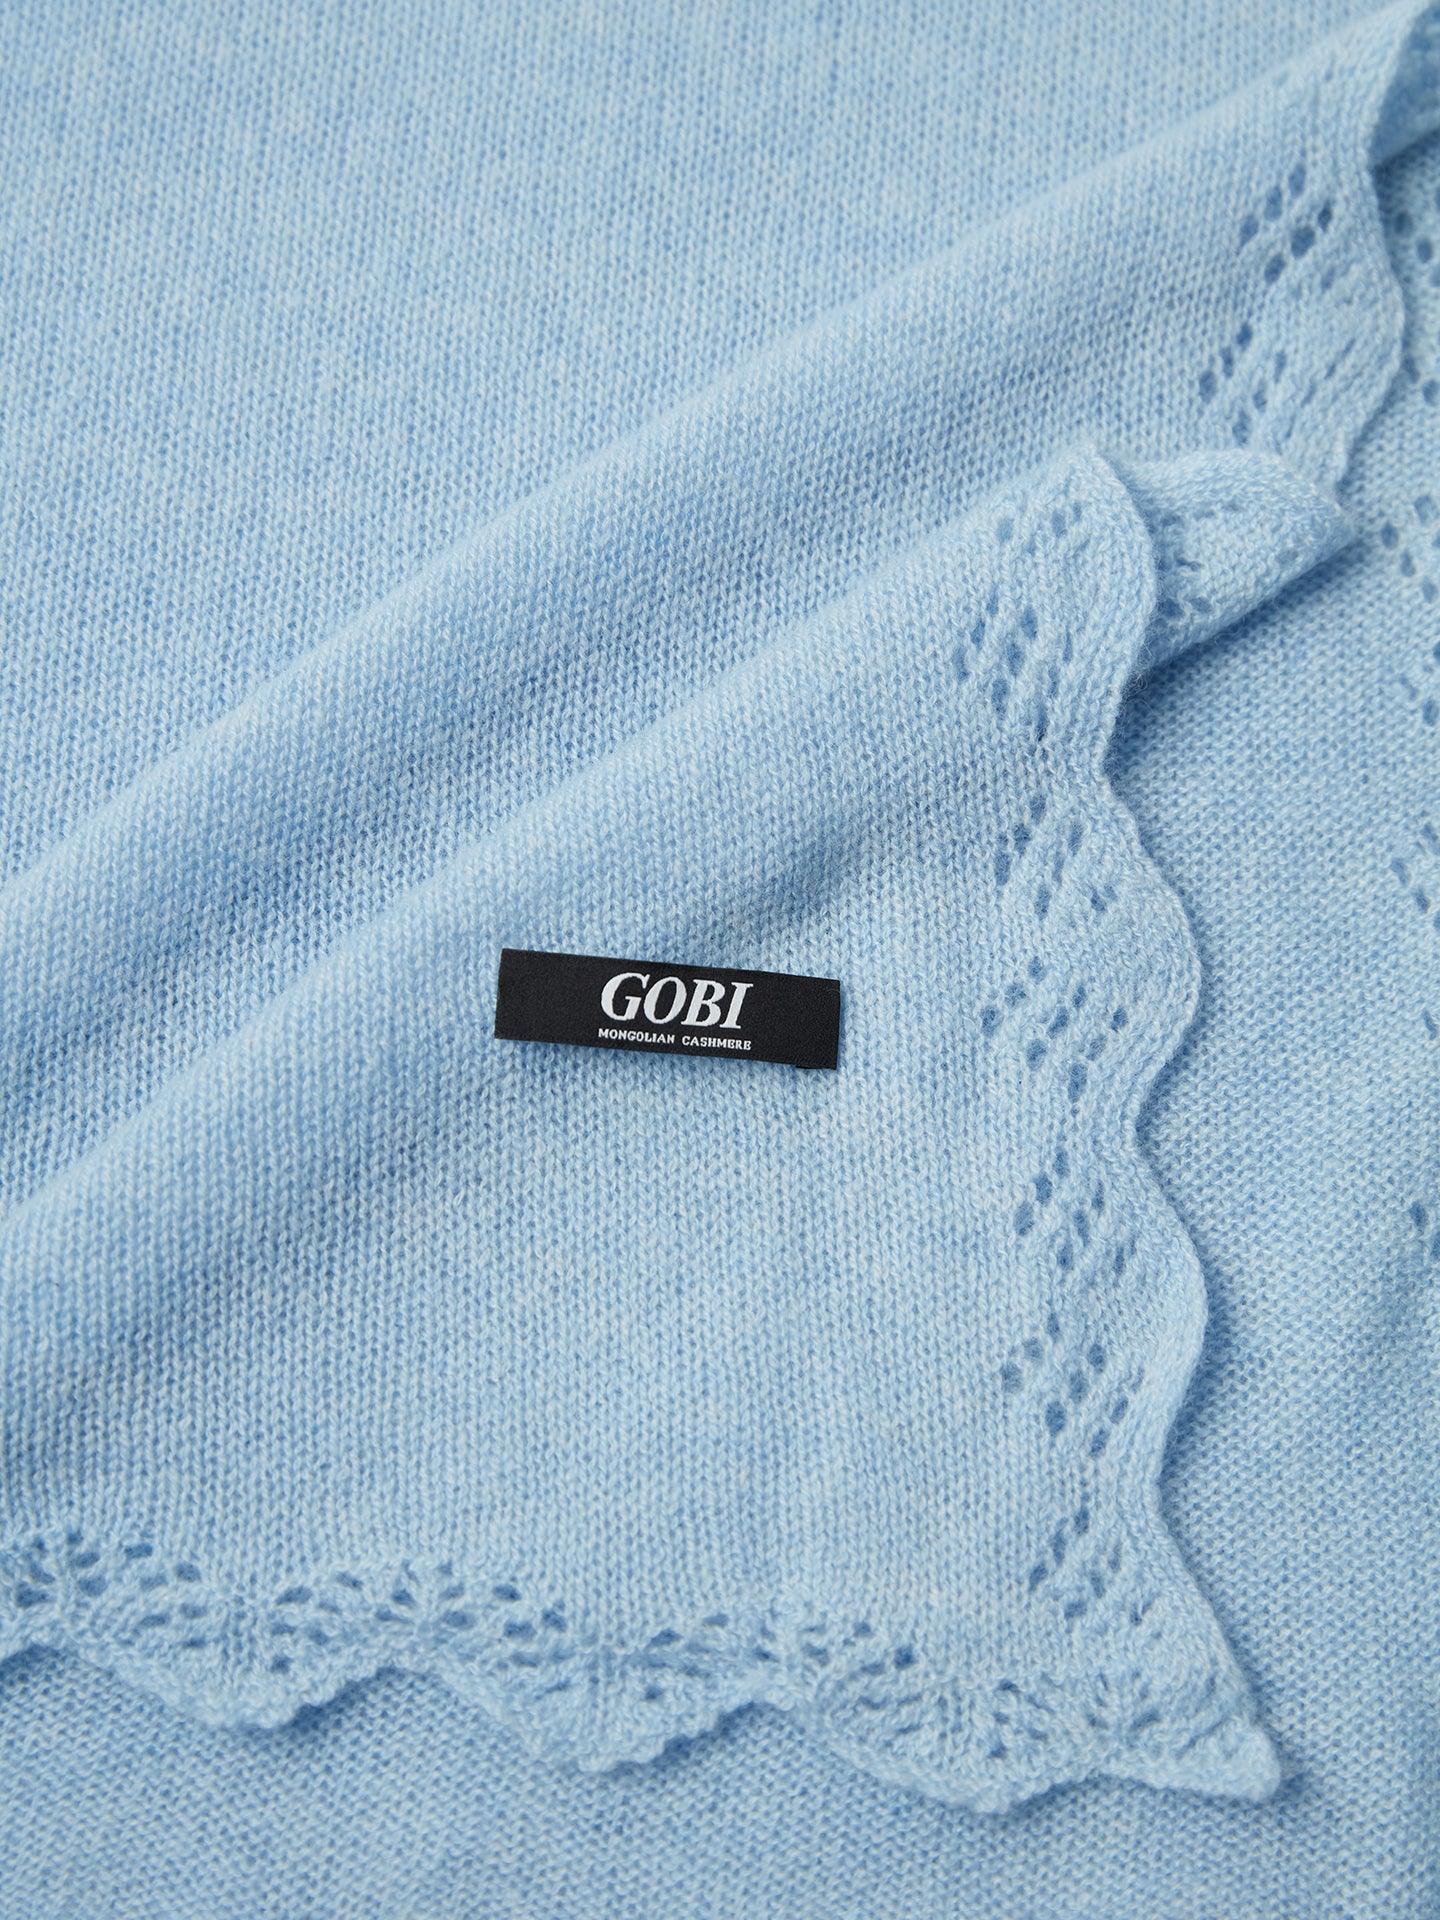 Baby Cashmere blanket Light Blue - Gobi Cashmere